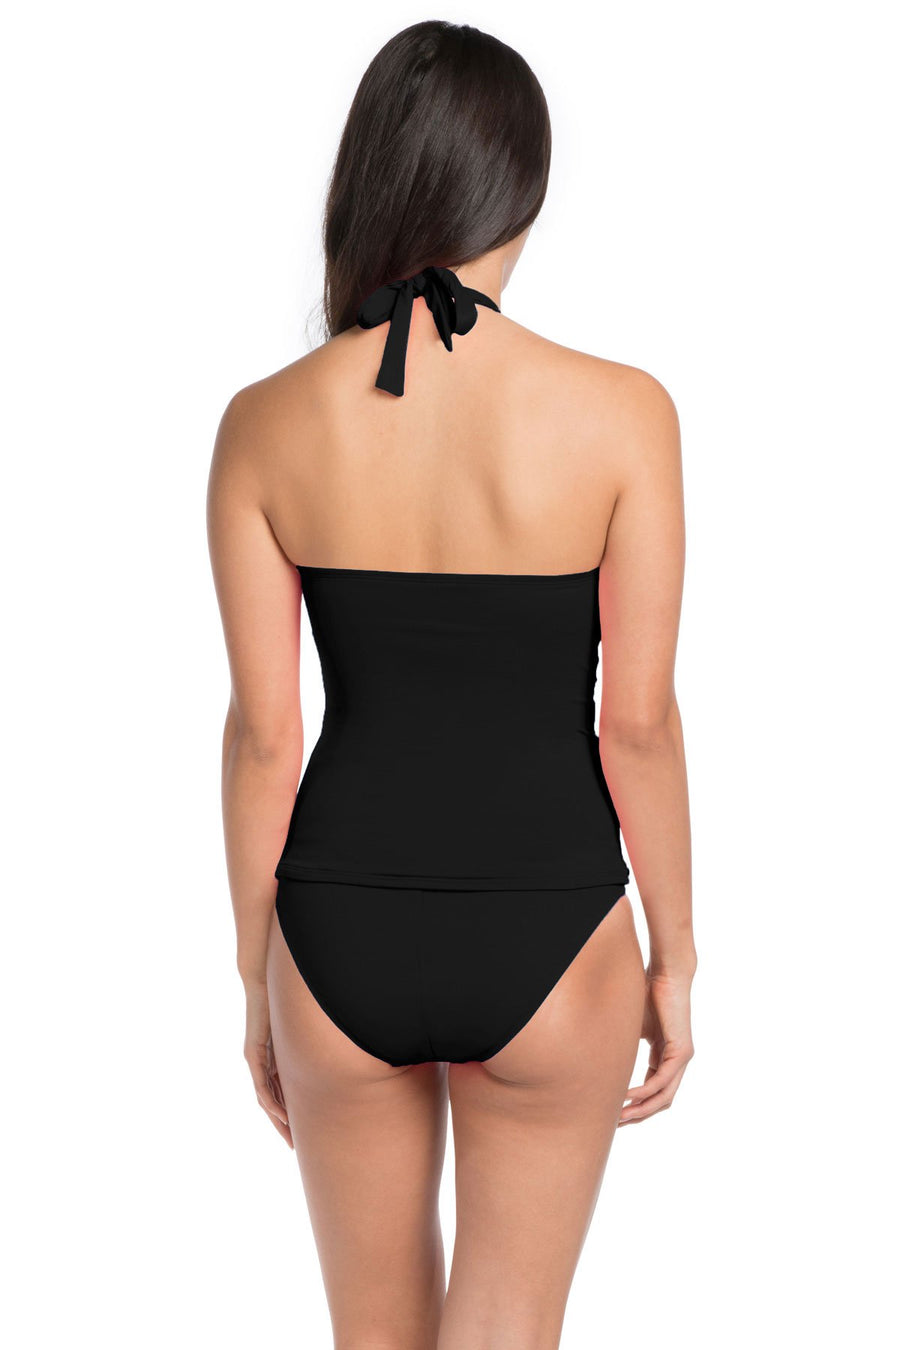 La Blanca Black Halter Tankini Top - Key West Swimwear